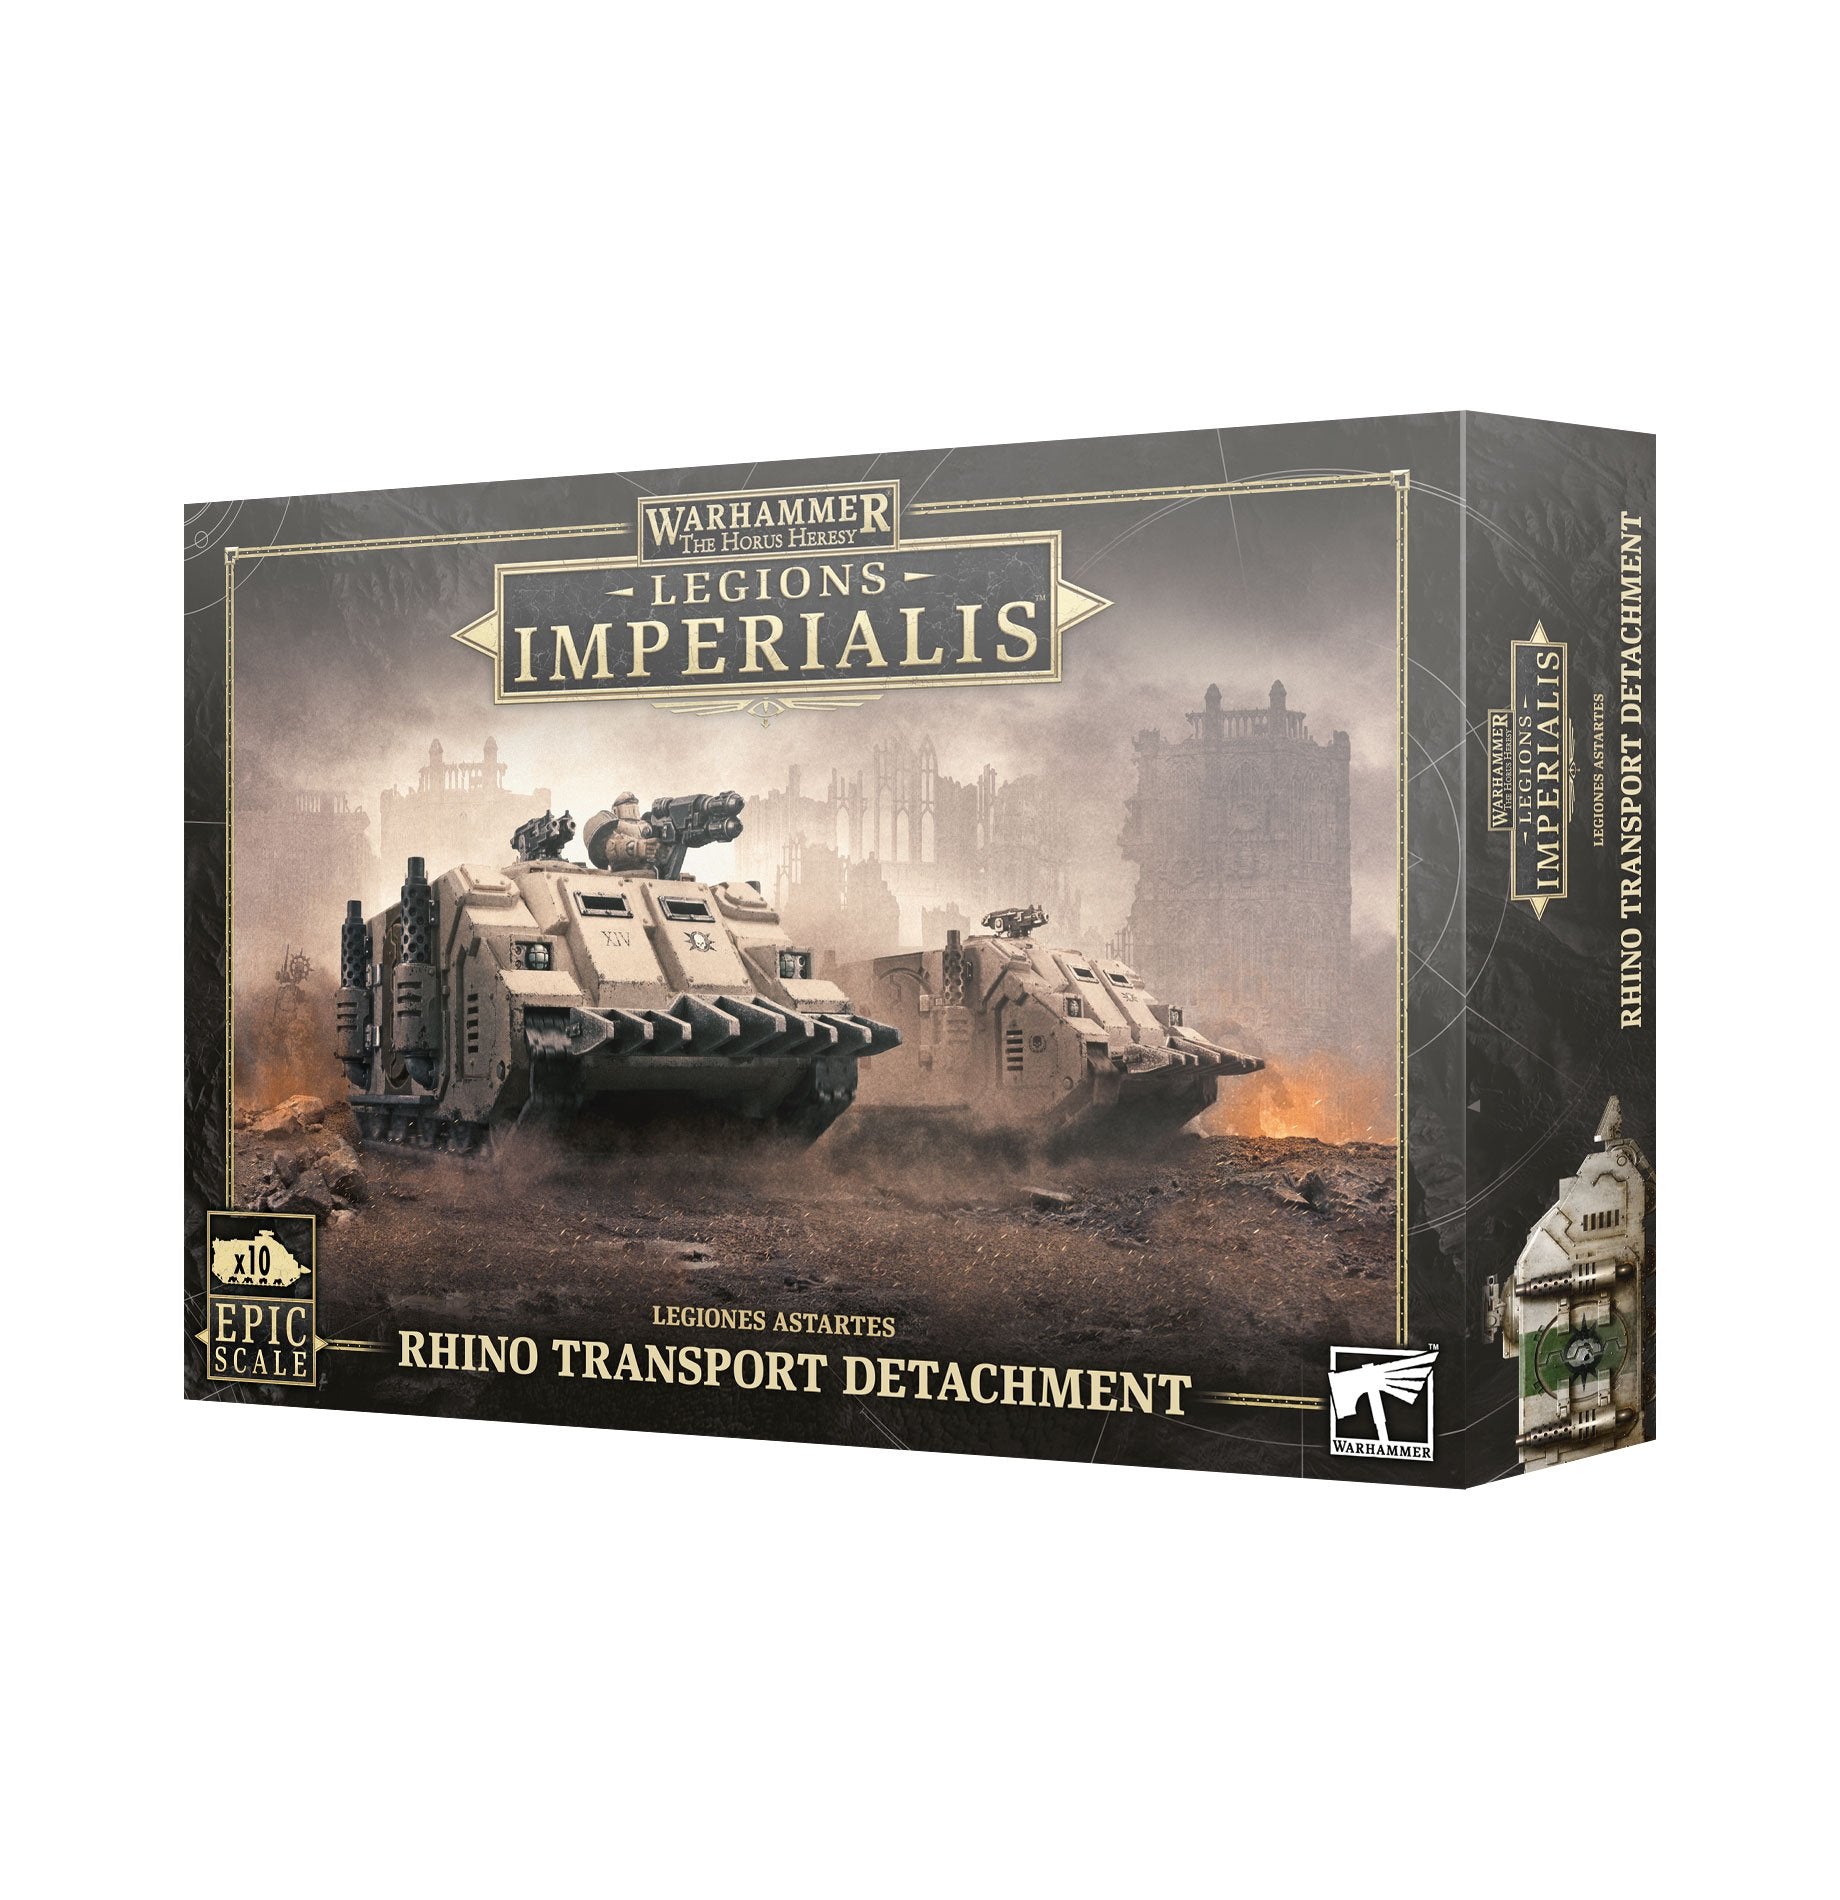 Rhino Transport Detachment: Legions Imperialis